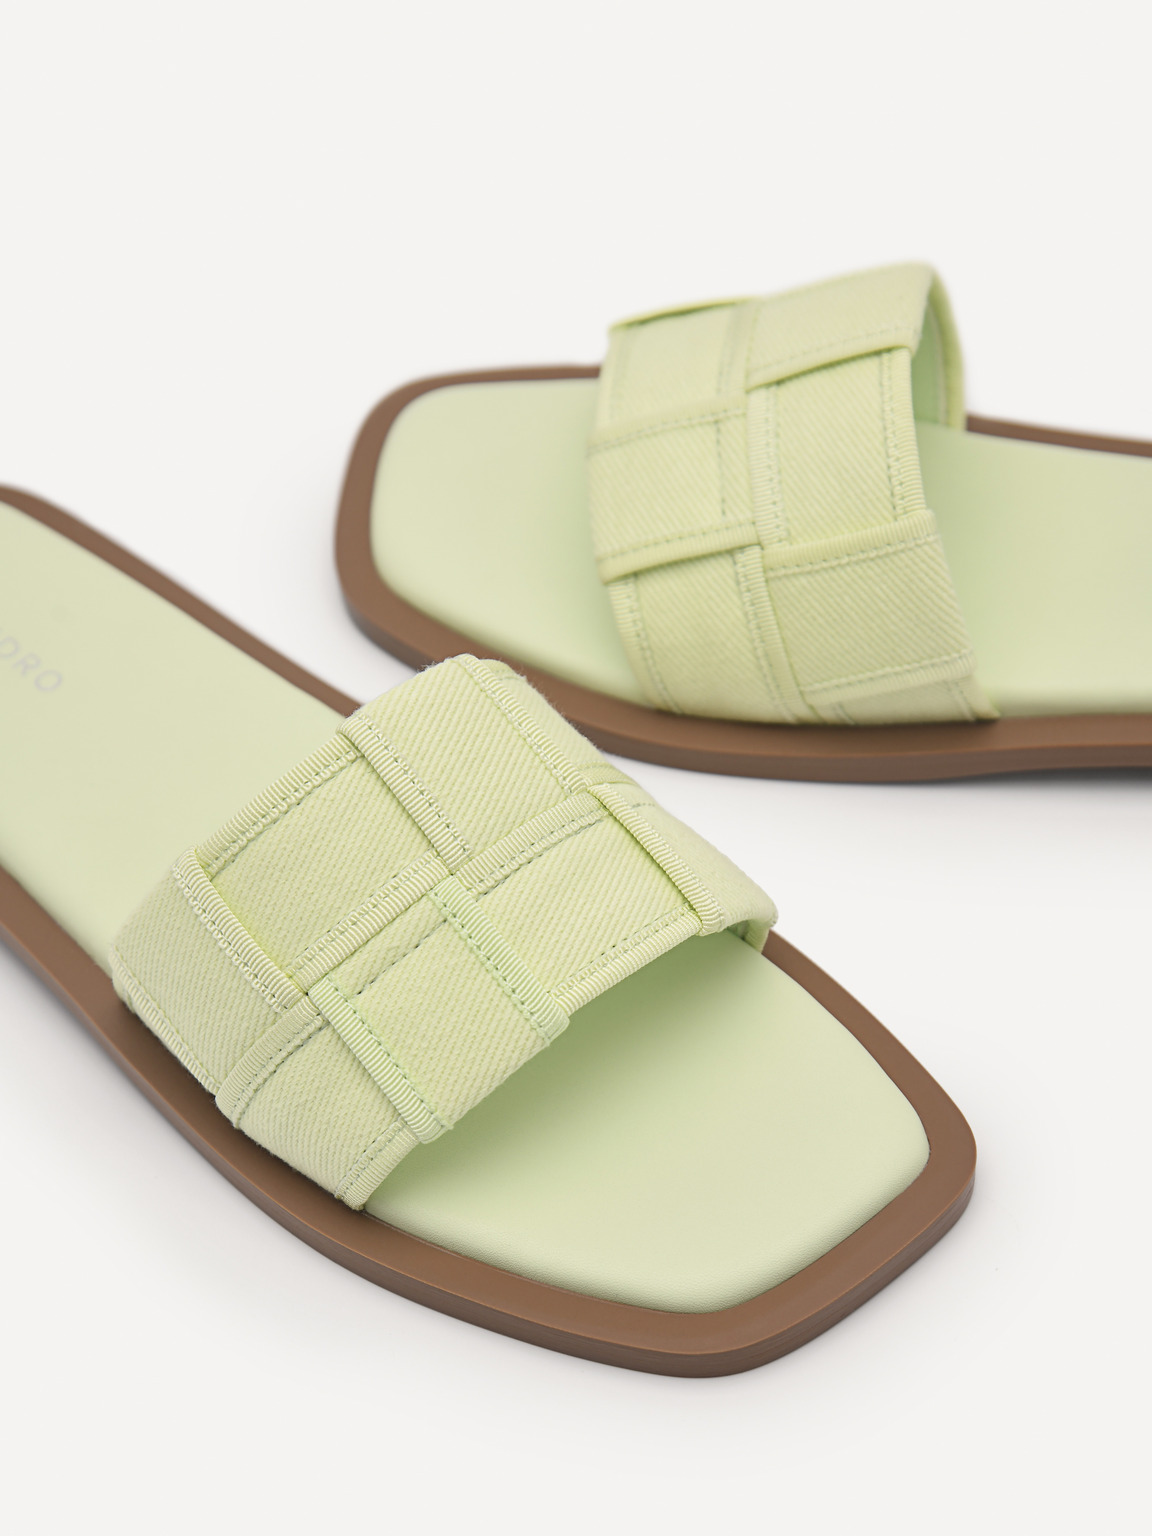 Ibiza Woven Slip-On Sandals, Light Green